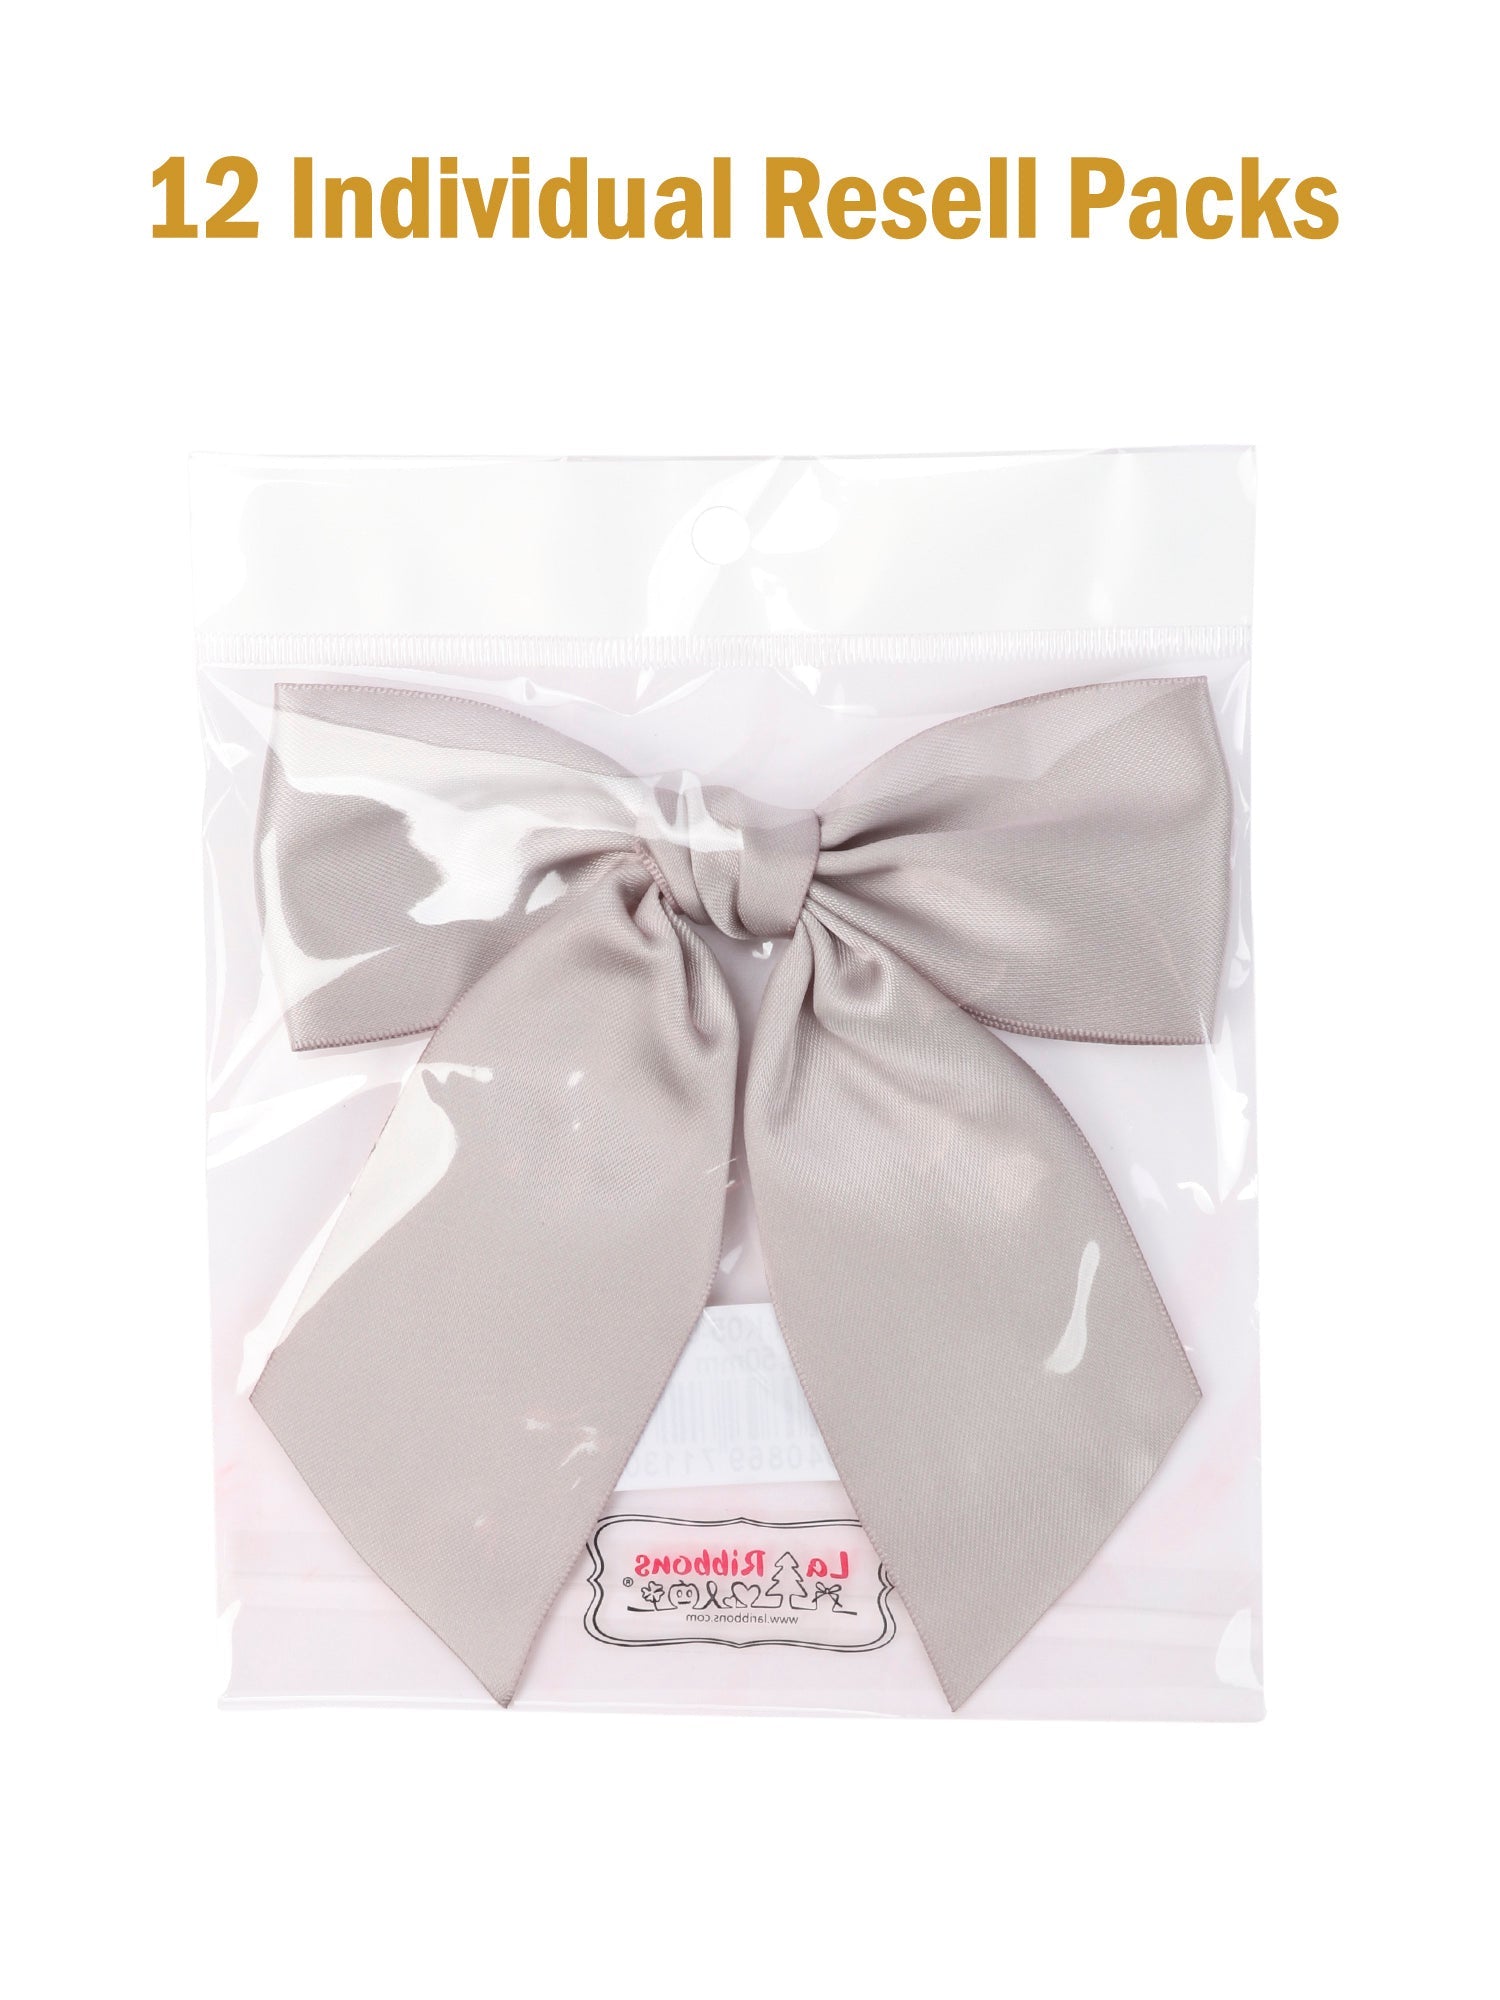 12pcs Gray Satin Ribbons Gift Wrapping Supplies Gift Bow Bundle